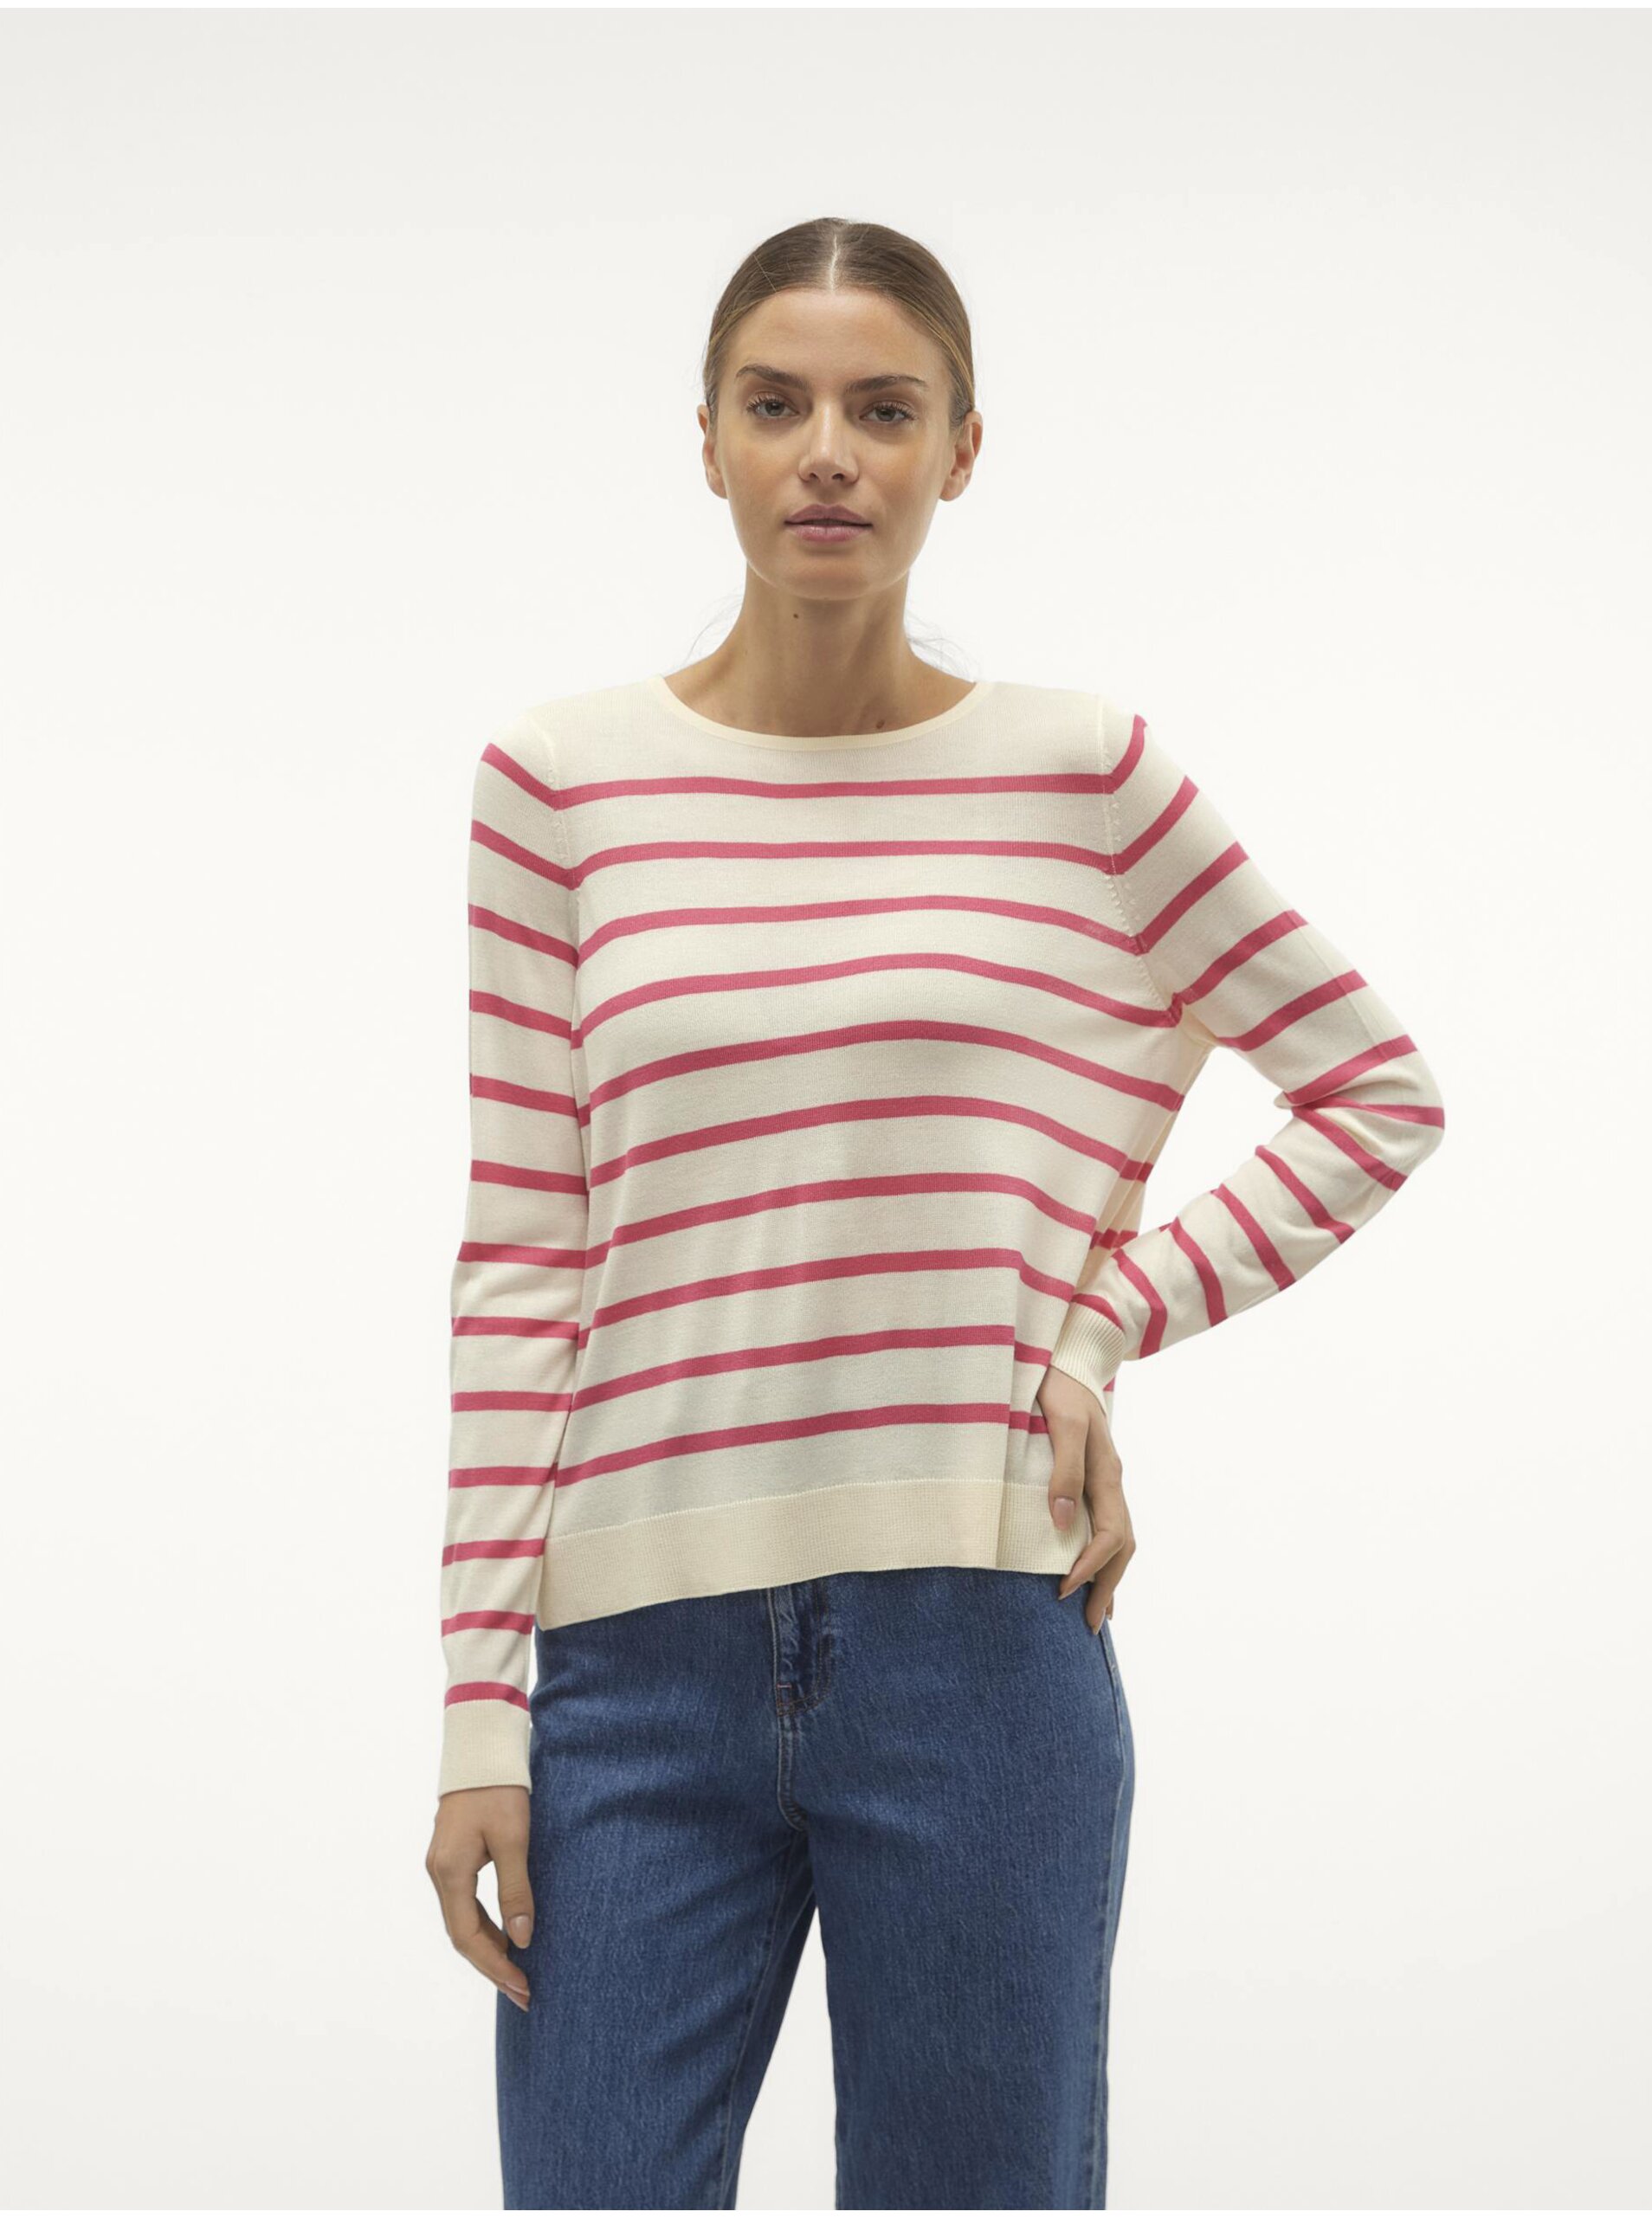 Pink and cream women's striped sweater Vero Moda Nova - Women